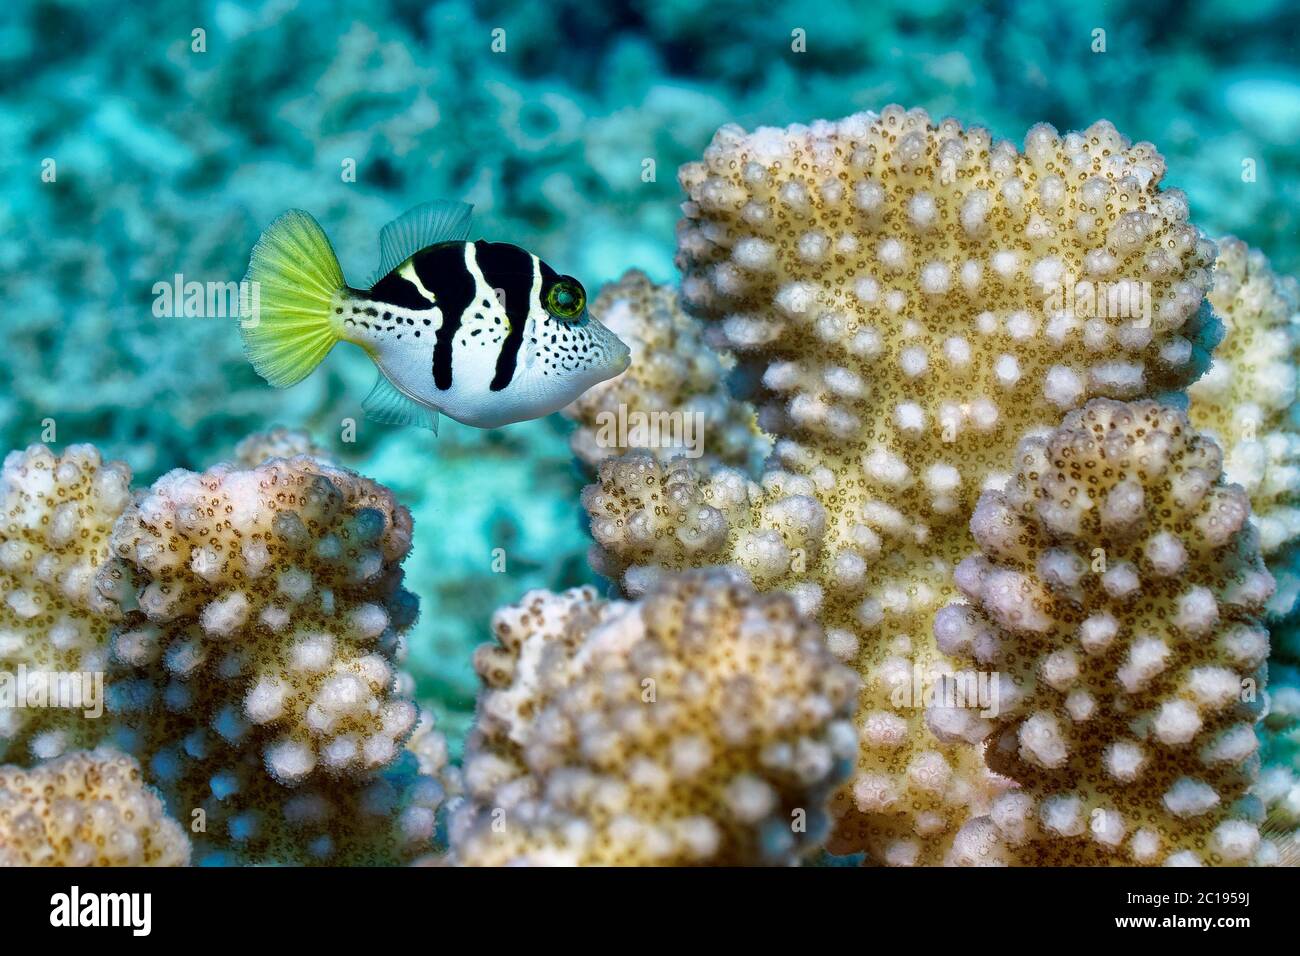 Young blacksaddle filefish / Mimic filefish - Paraluteres prionurus Stock Photo